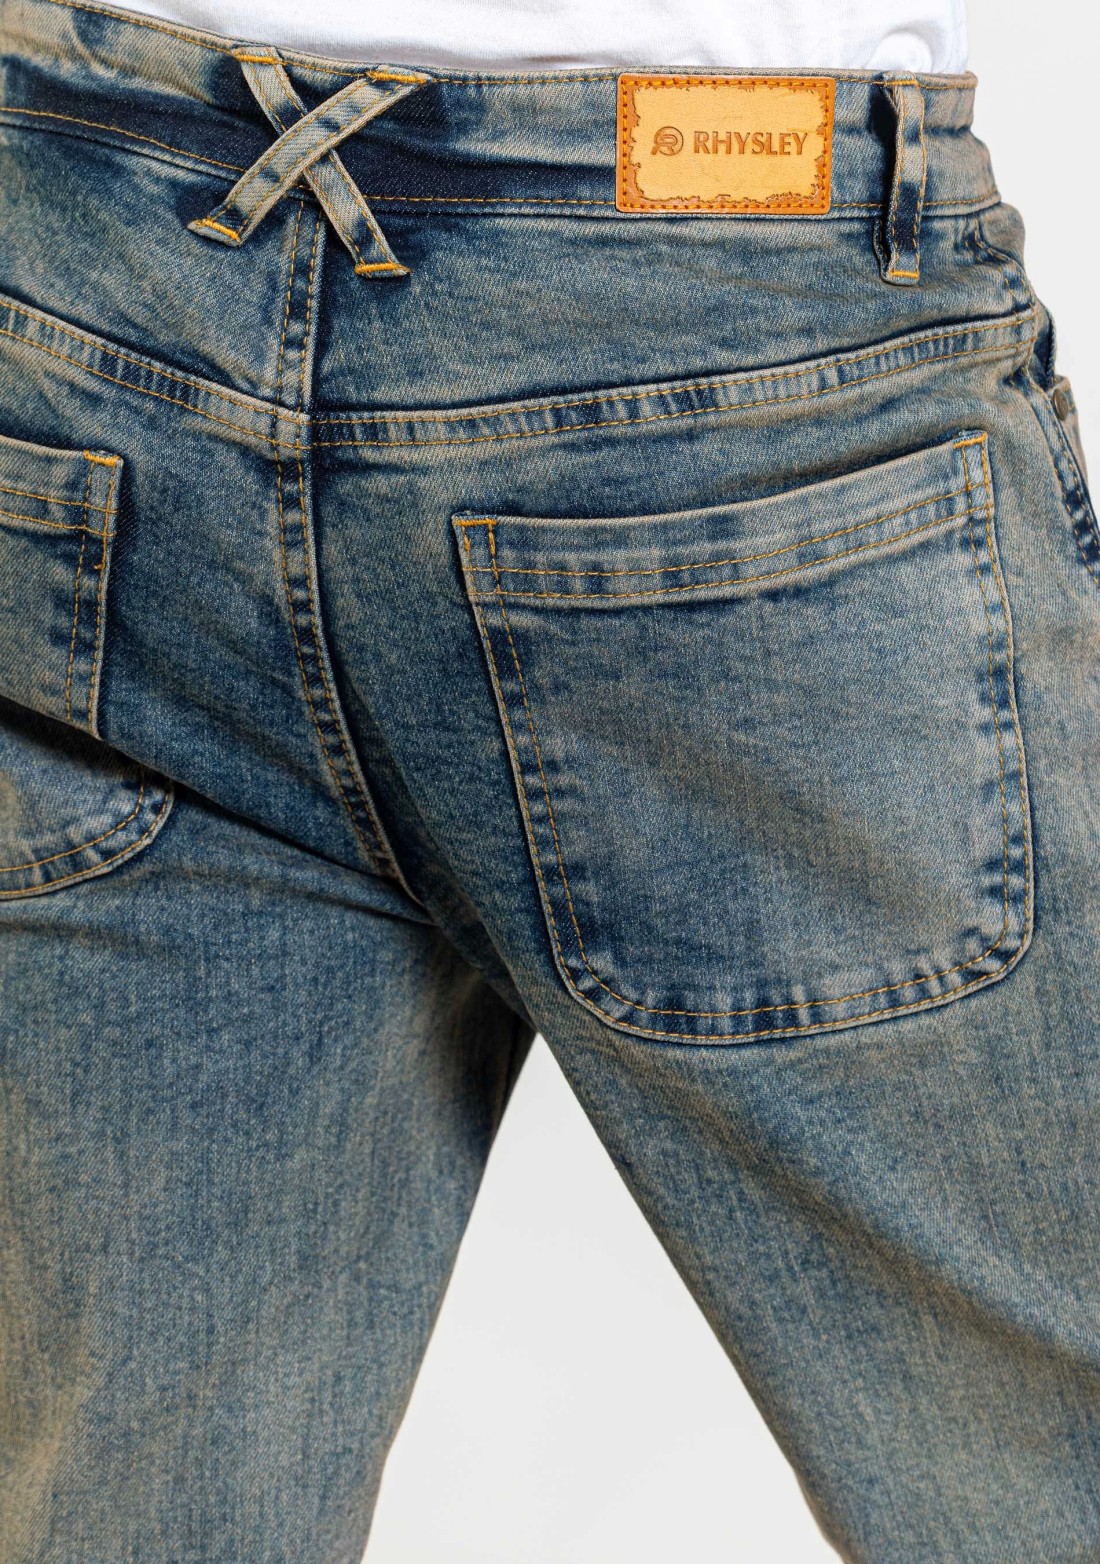 Two Tone Boot Cut Men's Fashion Jeans